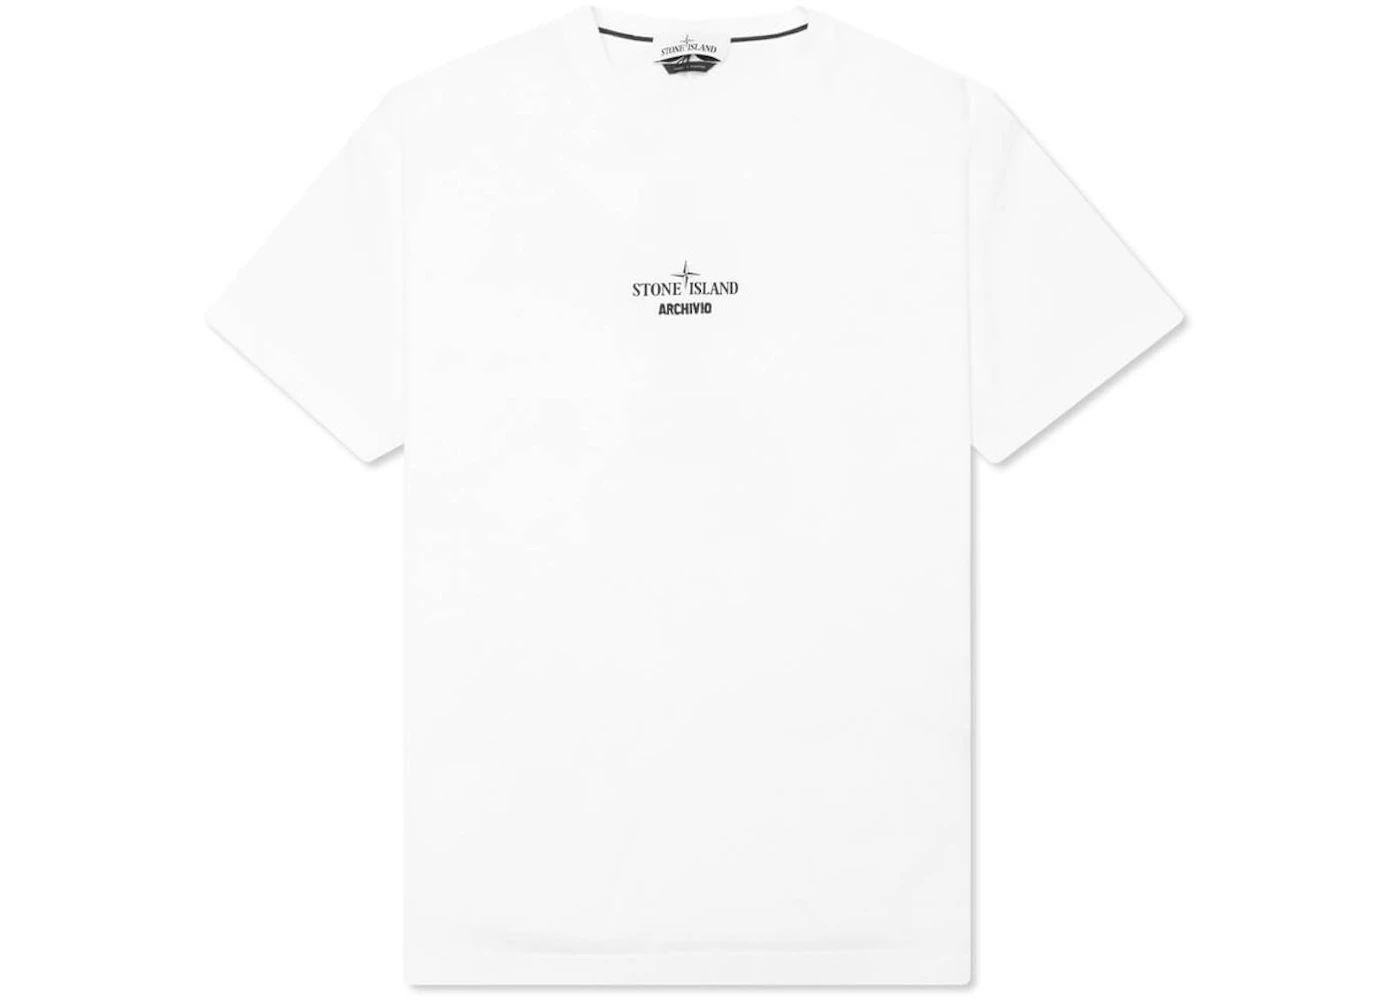 Stone Island Archivio 2NS91 Slim Fit T-shirt White Men's - FW21 - US